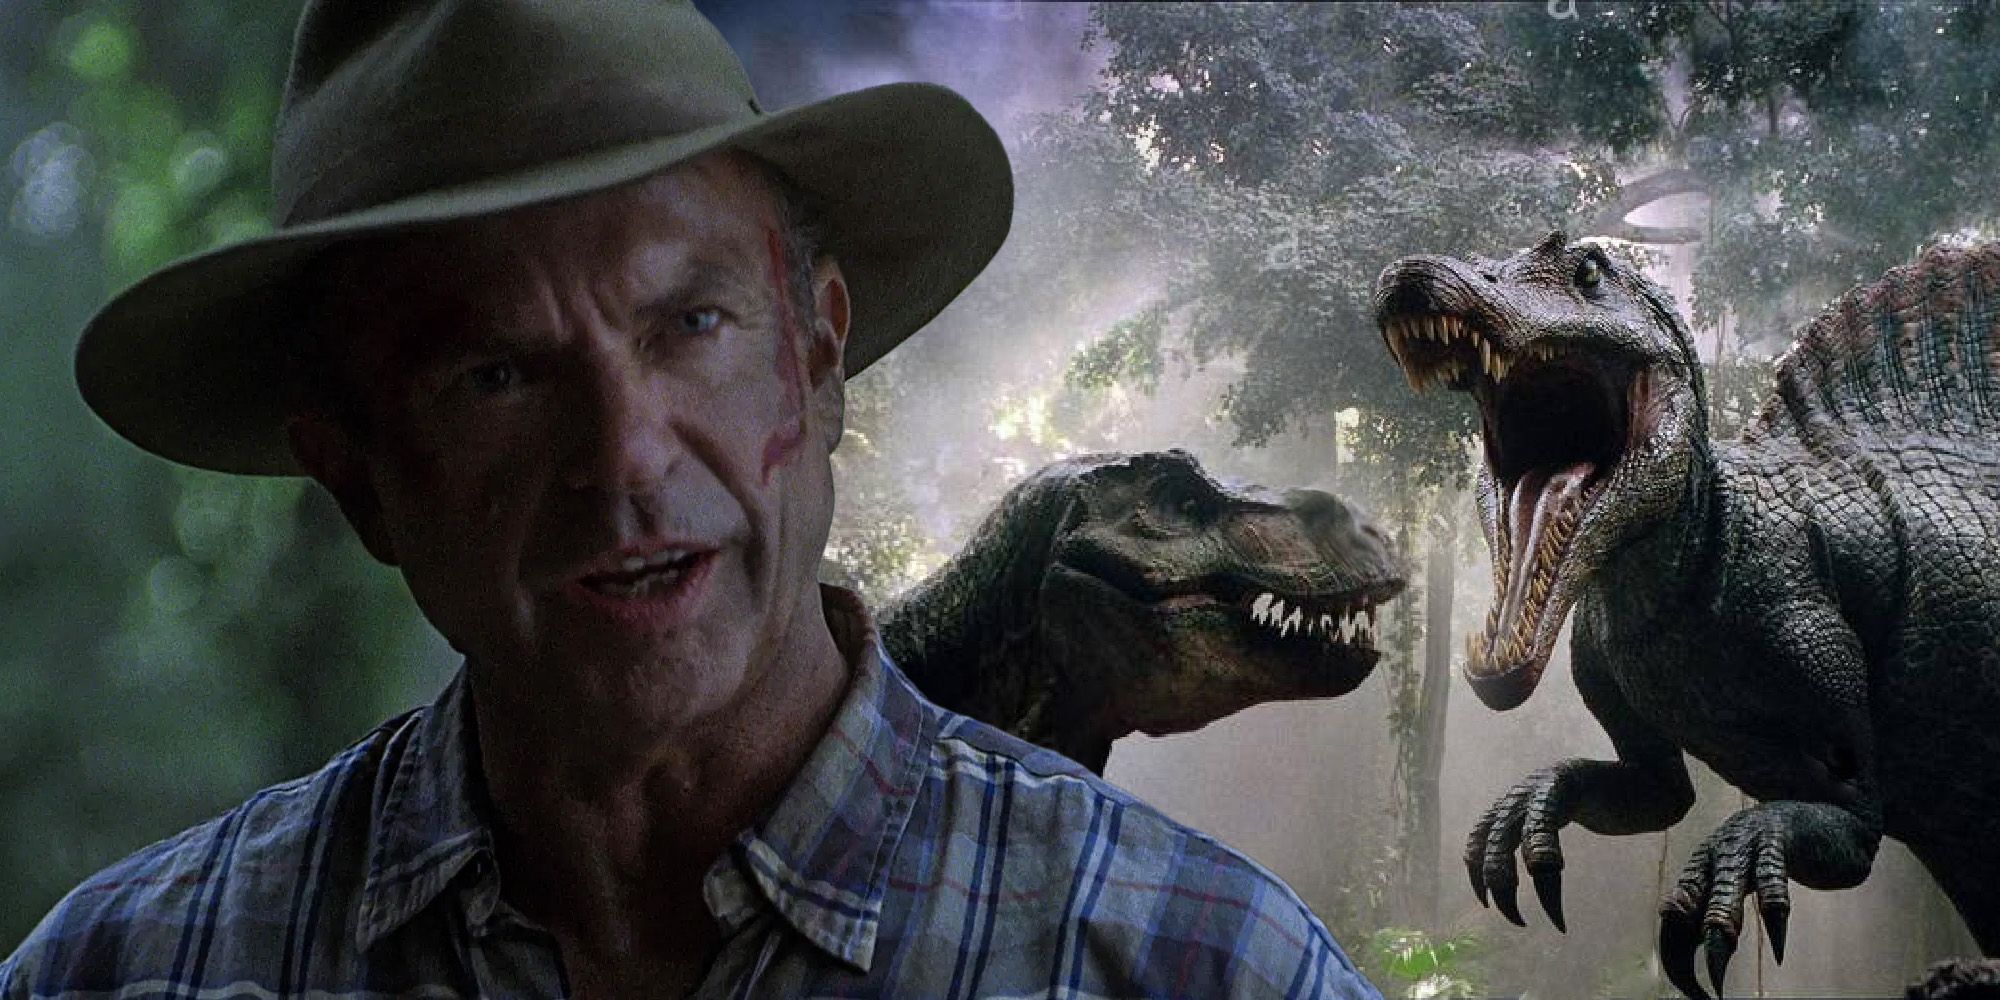 Jurassic Park 3 Cut An Awesome Scene Where A Raptor Rode A Dirt Bike